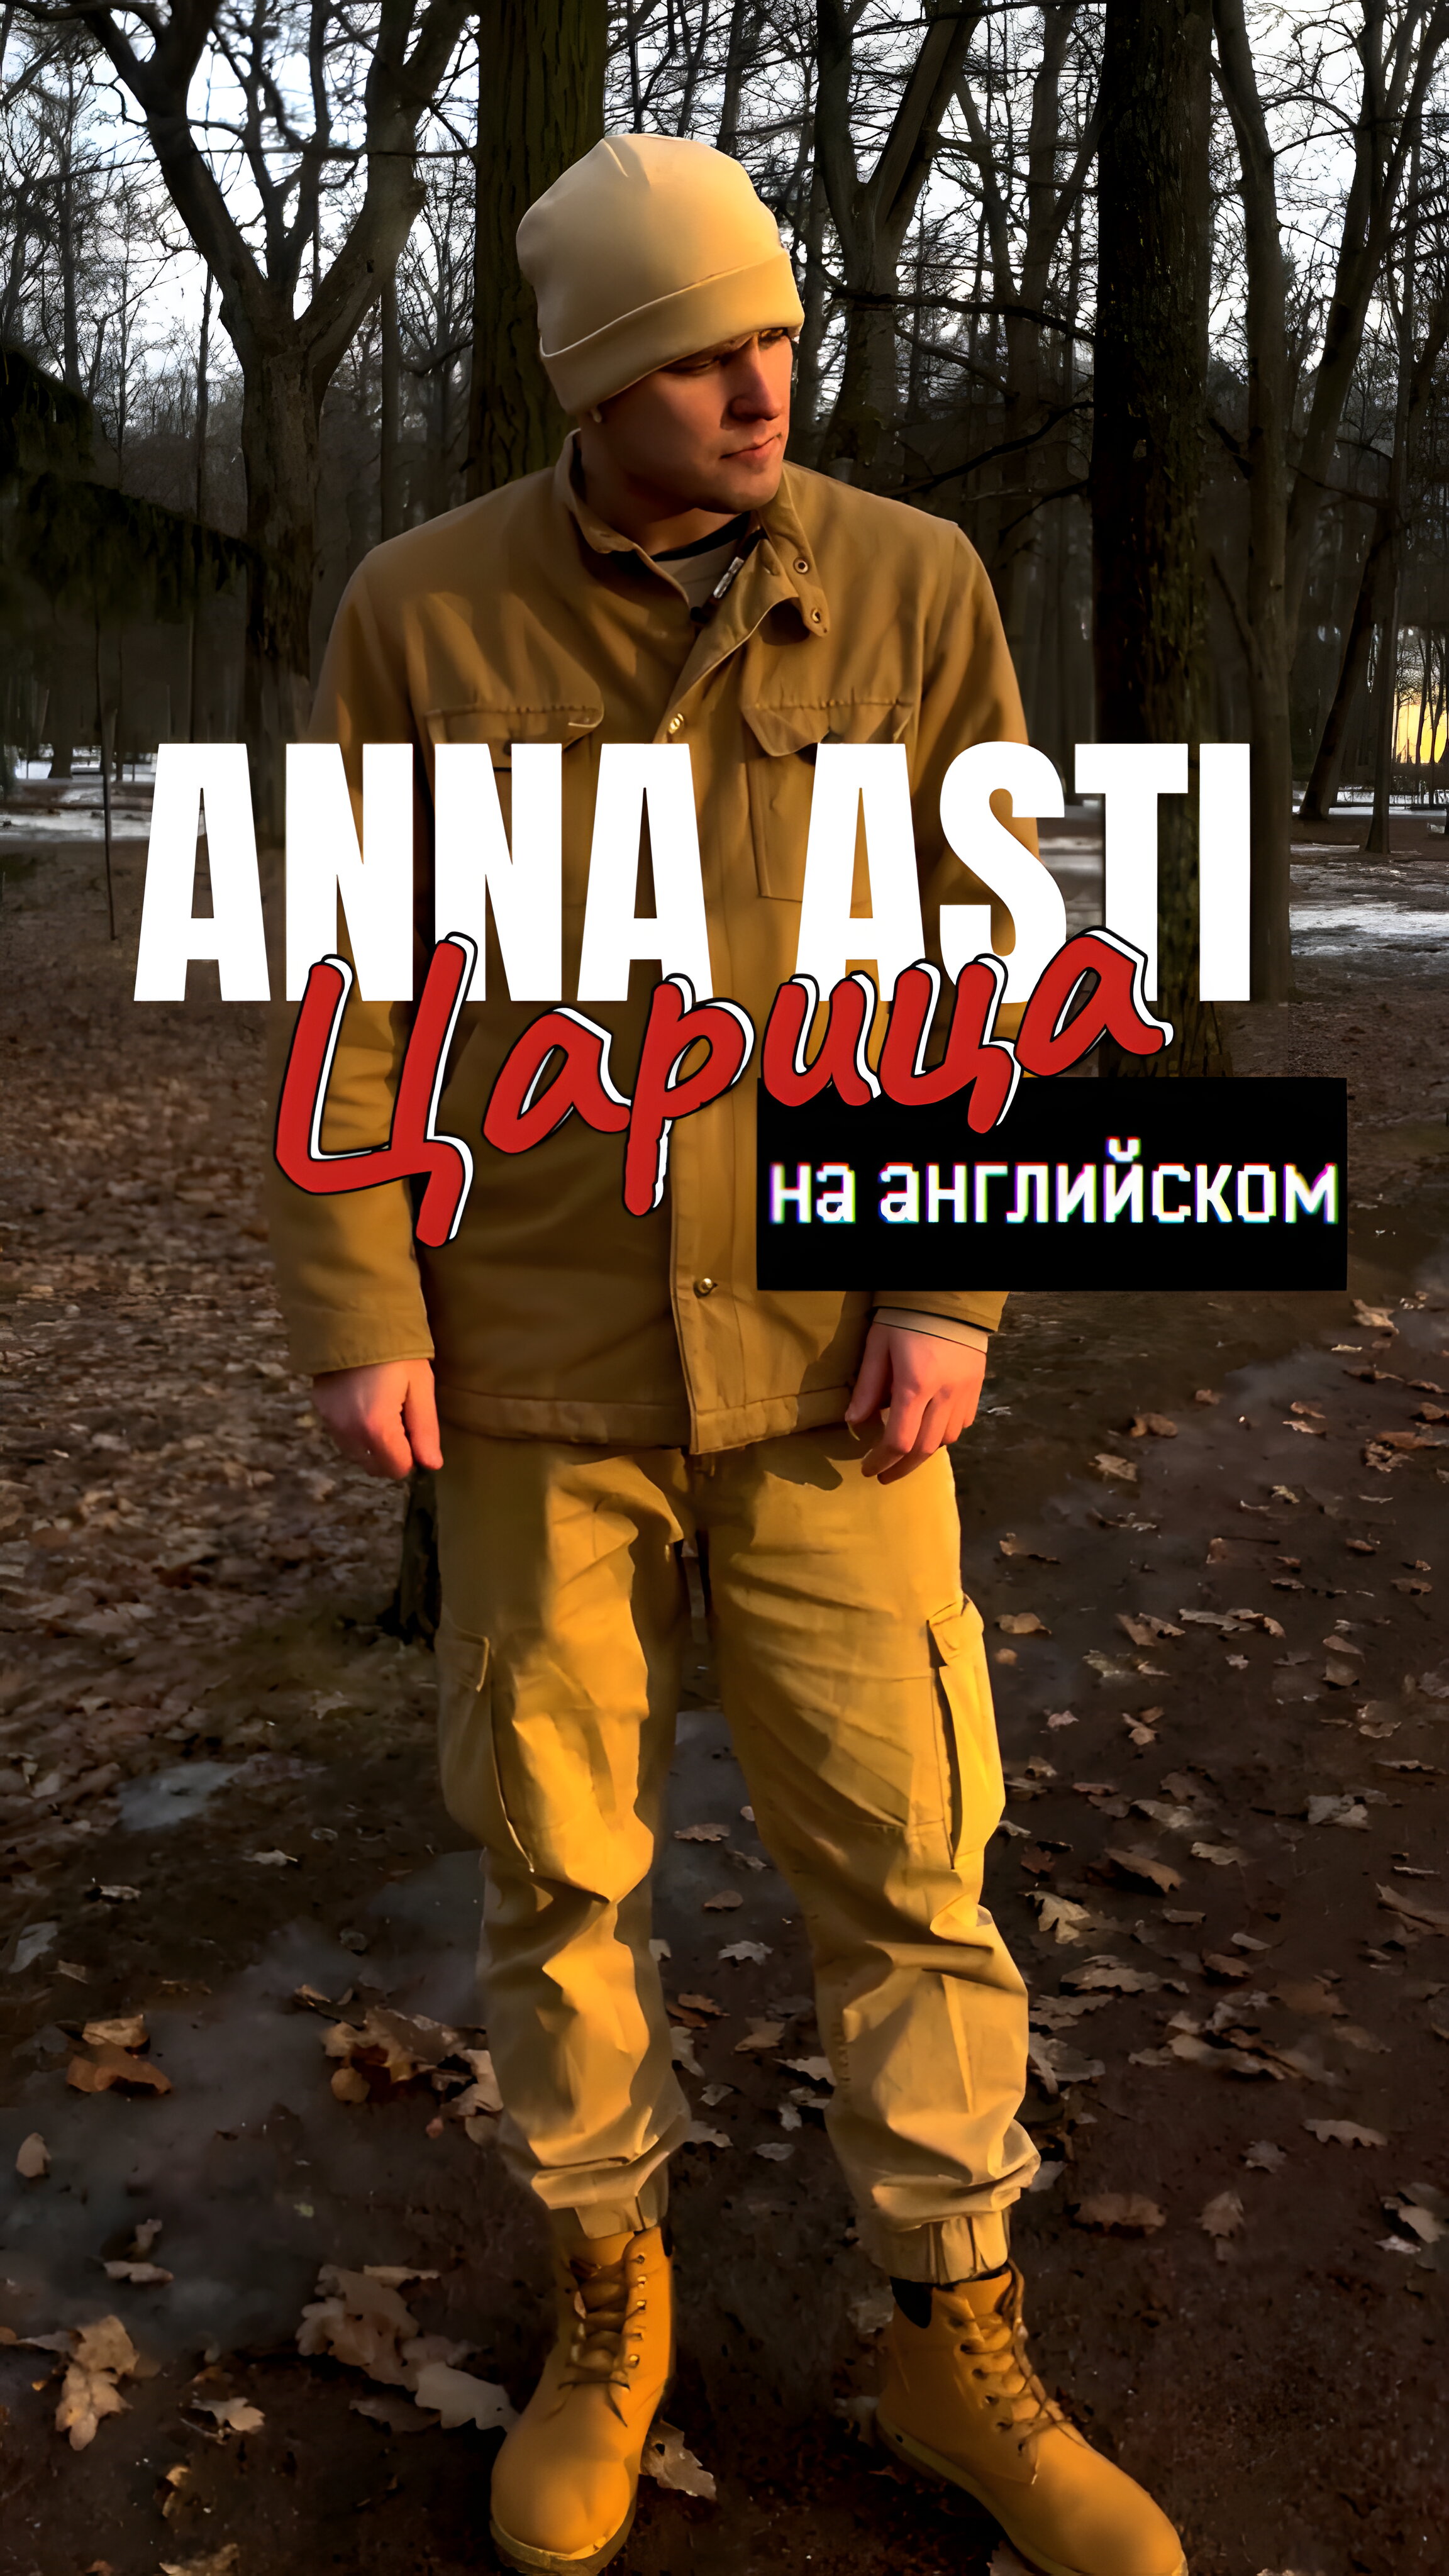 Anna Asti - Царица (рок-кавер на  английском языке)